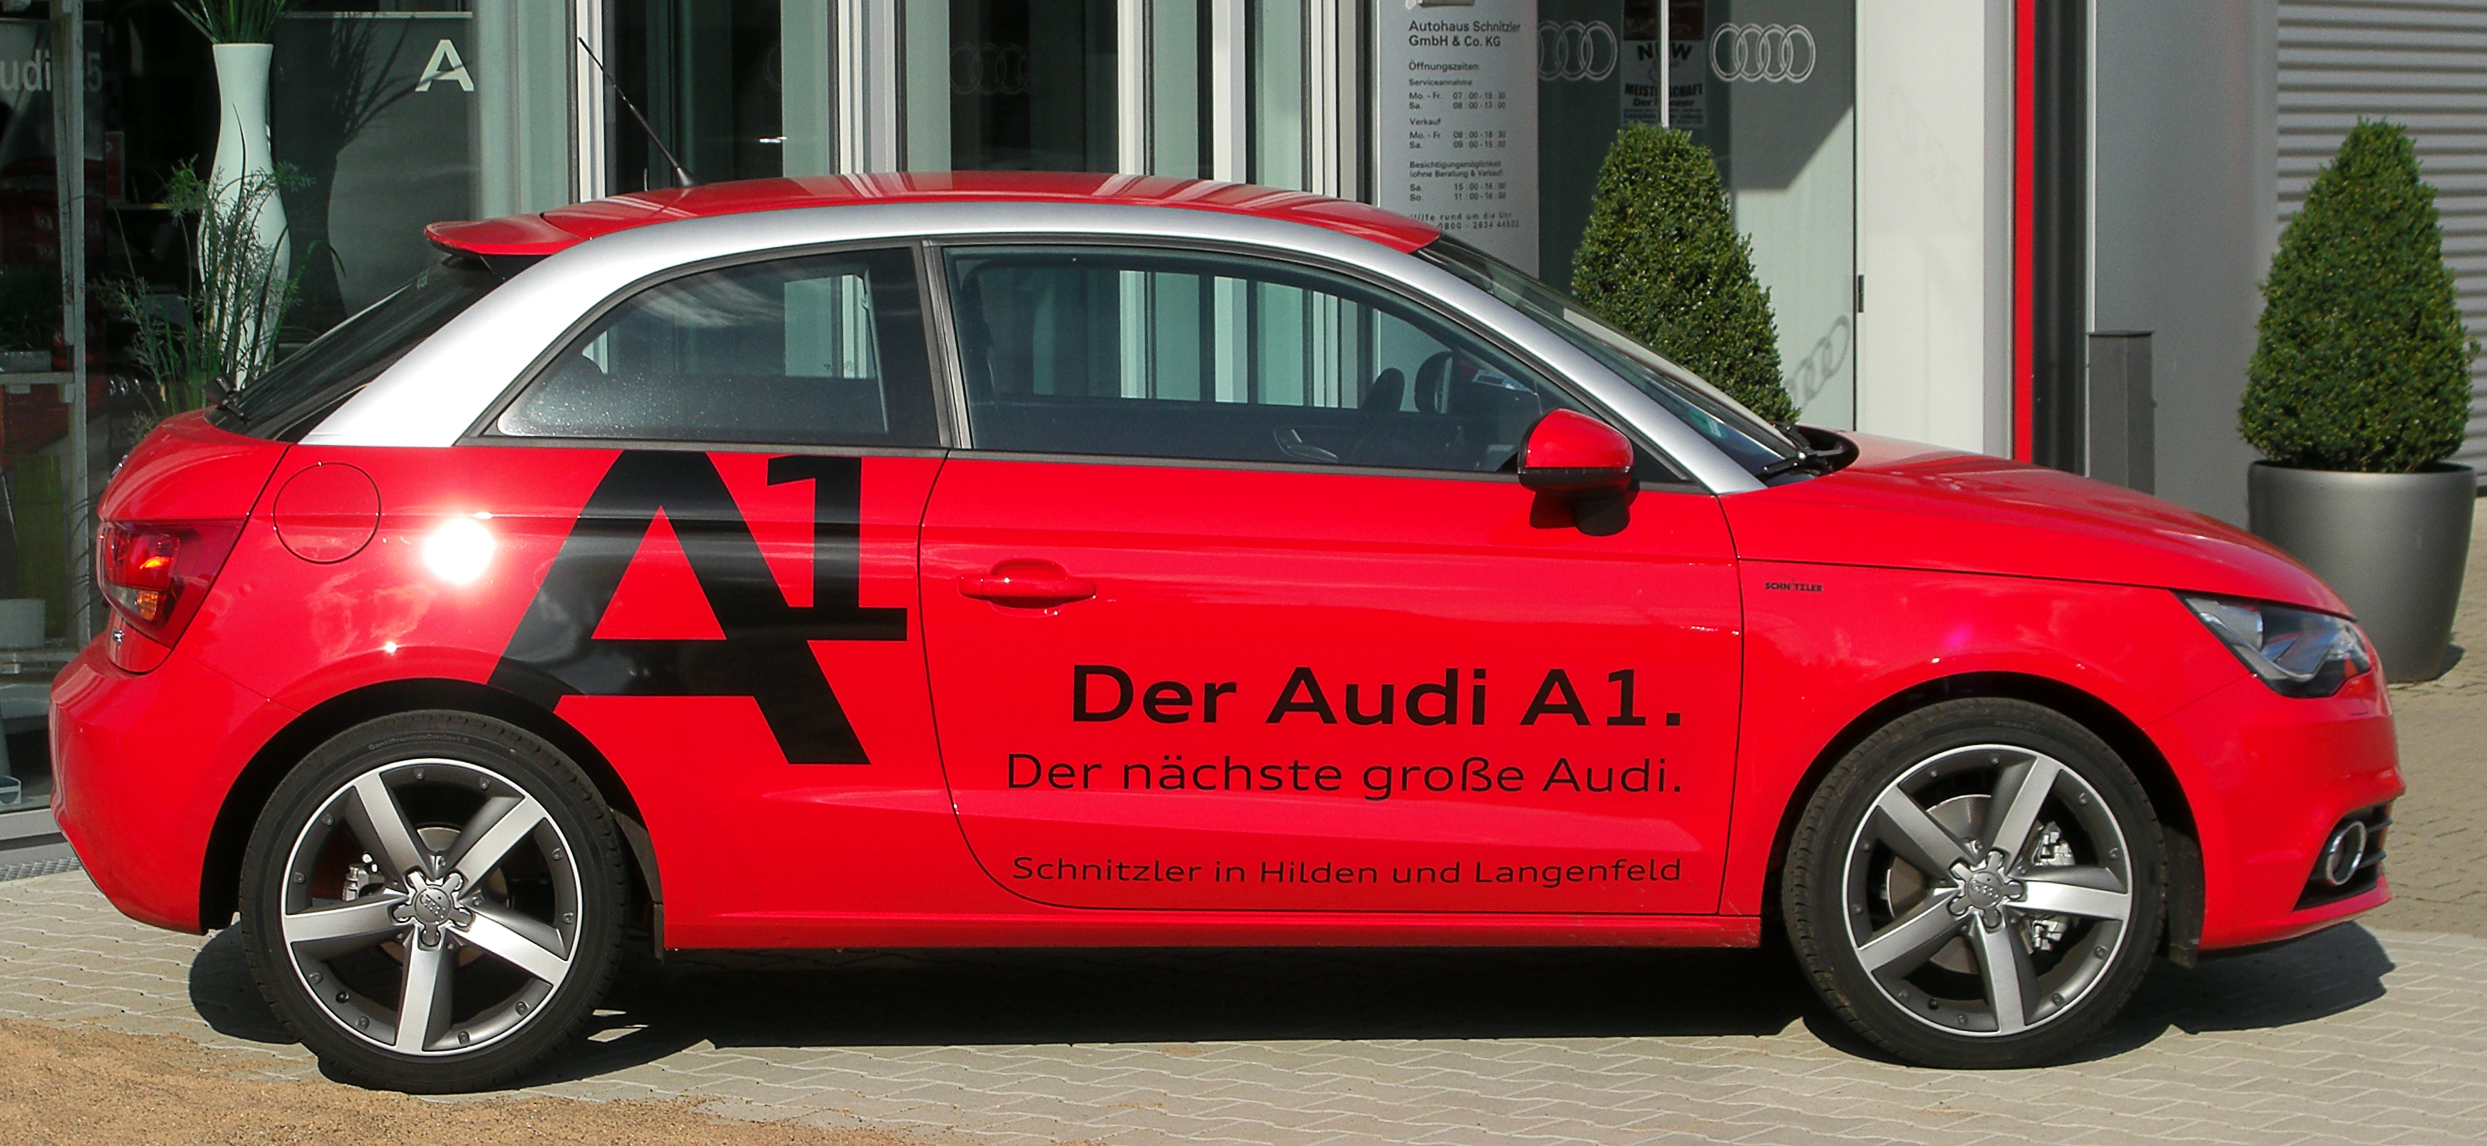 Audi A1 1.4 TFSI Ambition side 20100904